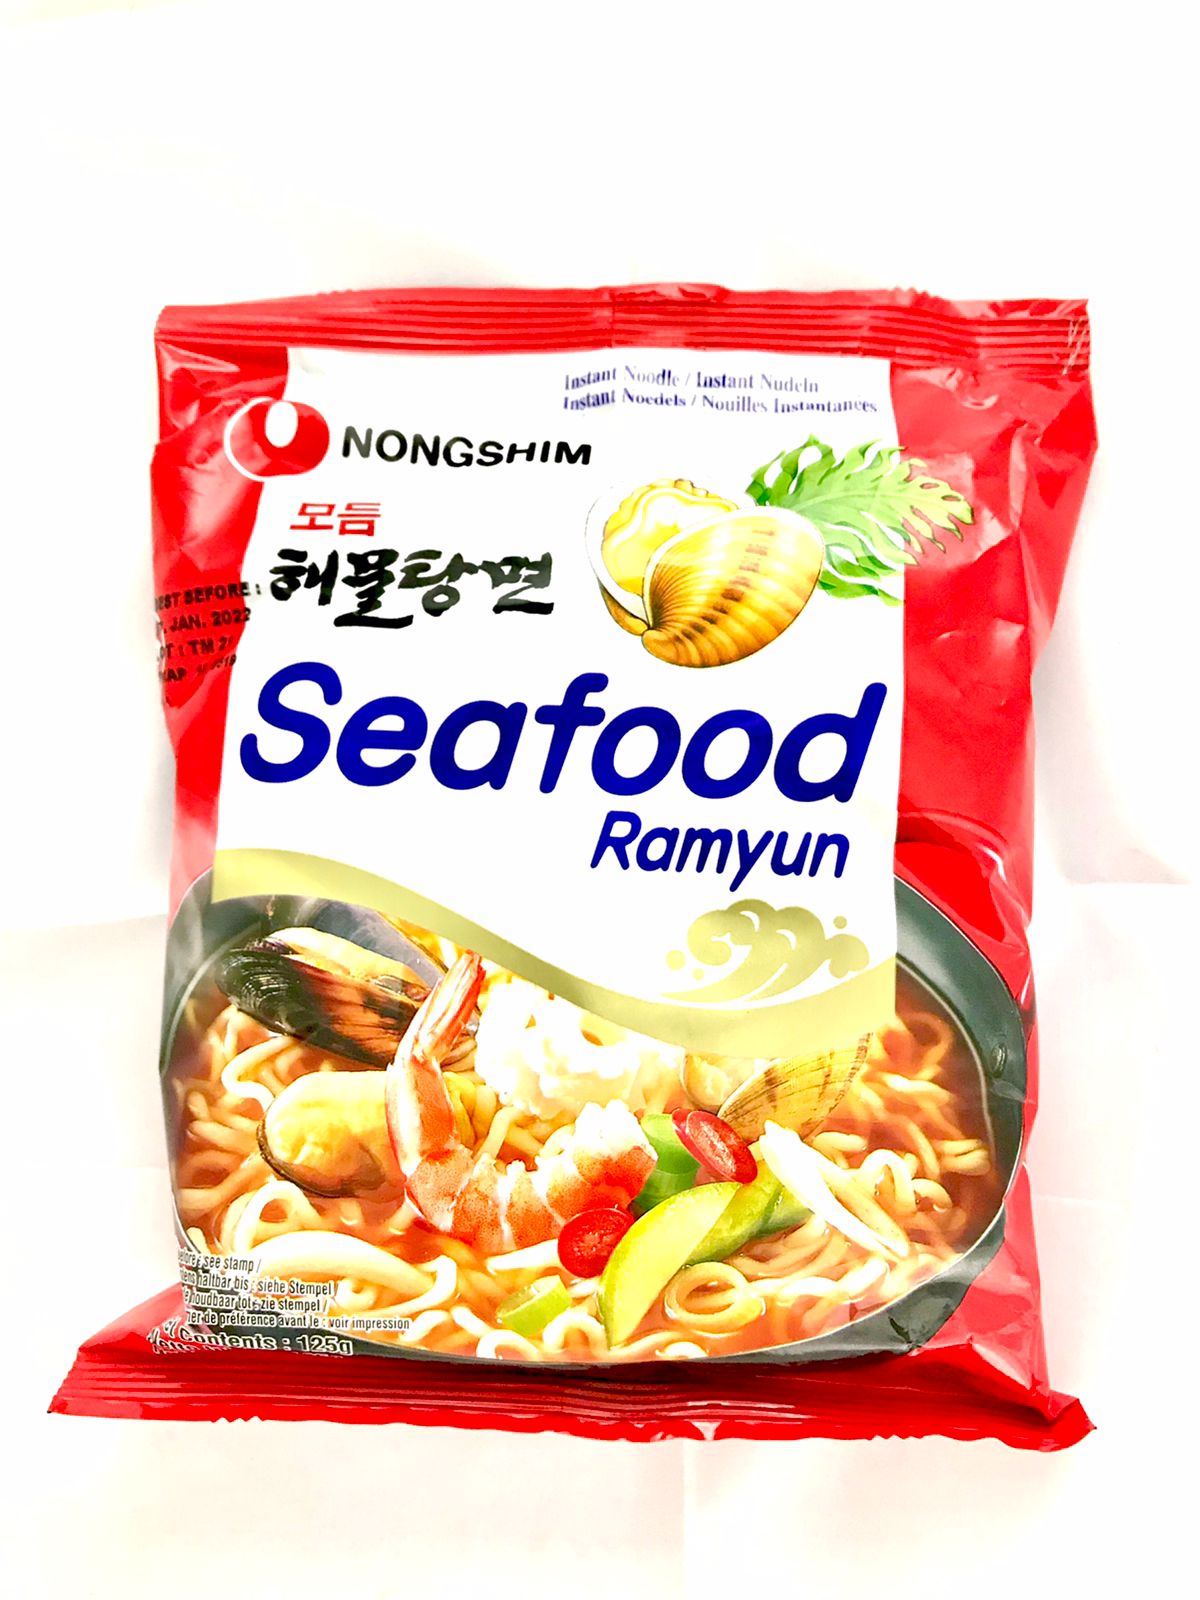 NONGSHIM Seafood Ramyun Instant Noodles